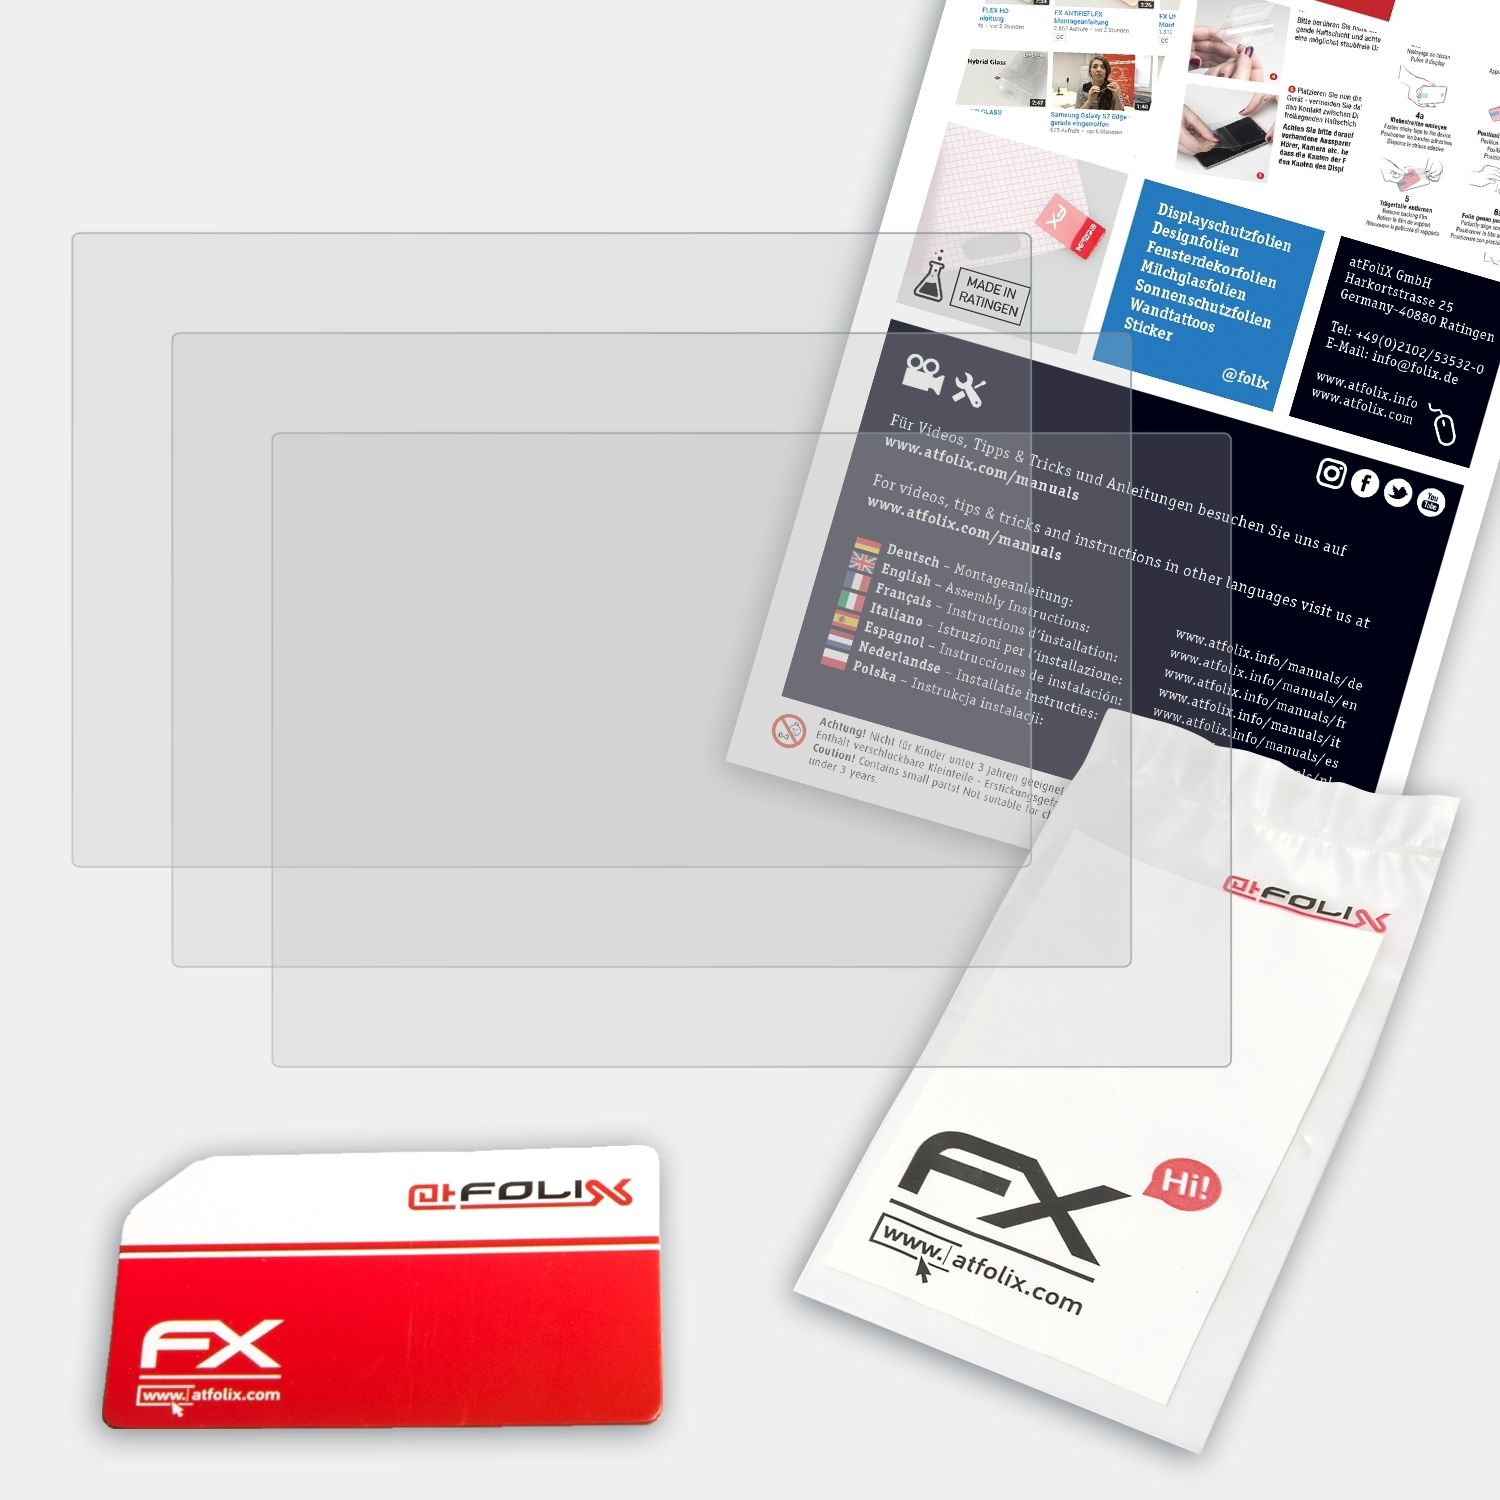 3x FX-Antireflex Panasonic Lumix Displayschutz(für ATFOLIX DMC-GH2)